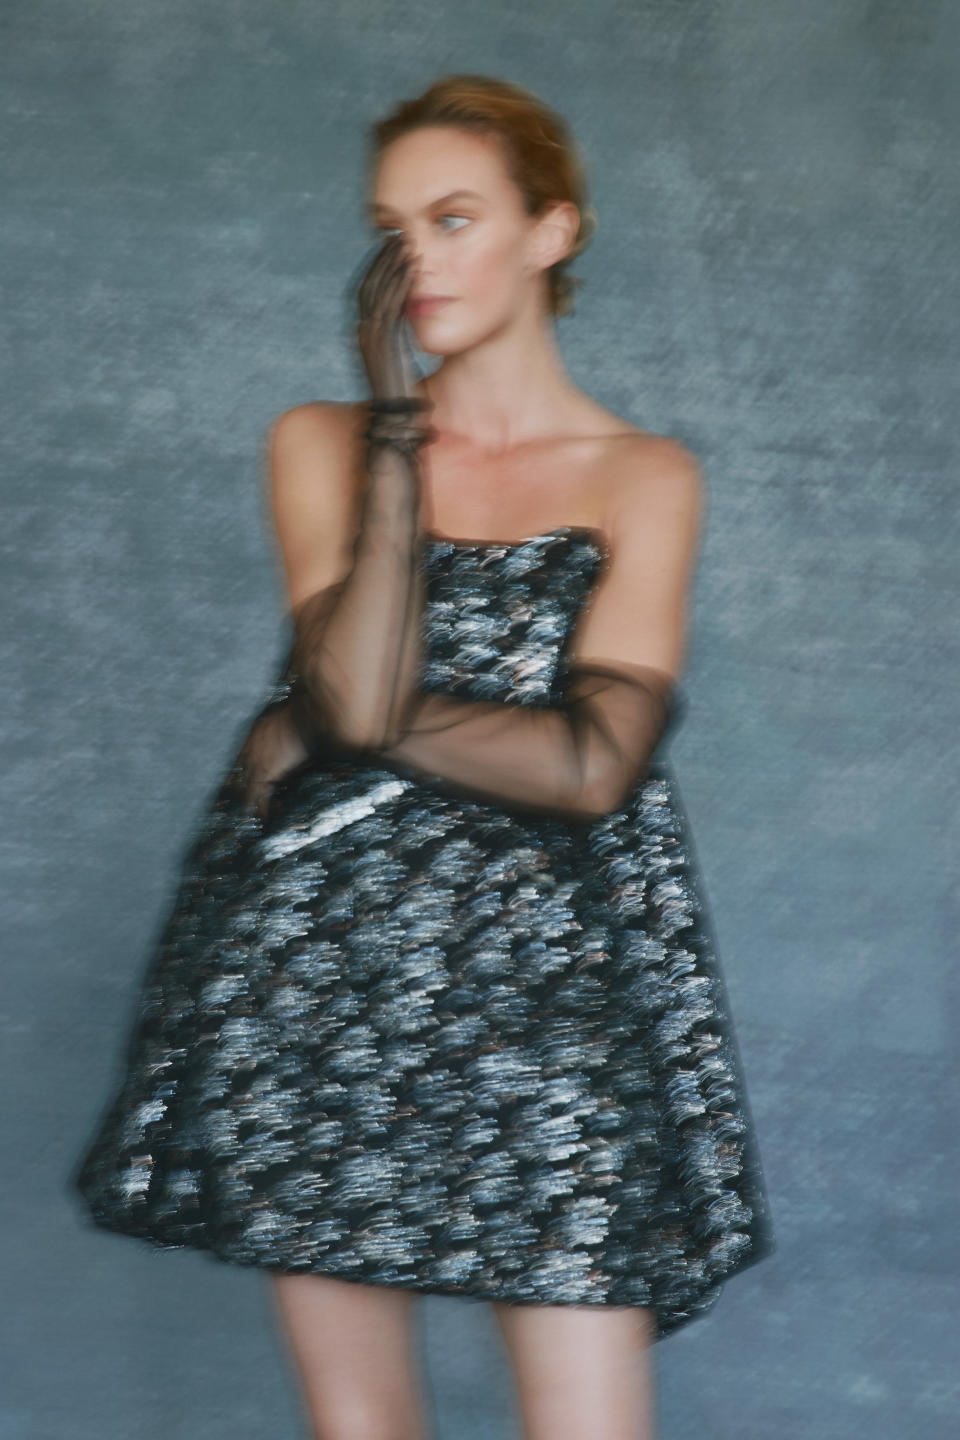 The Cloud Dress from Alexandra Pijut's debut collection.